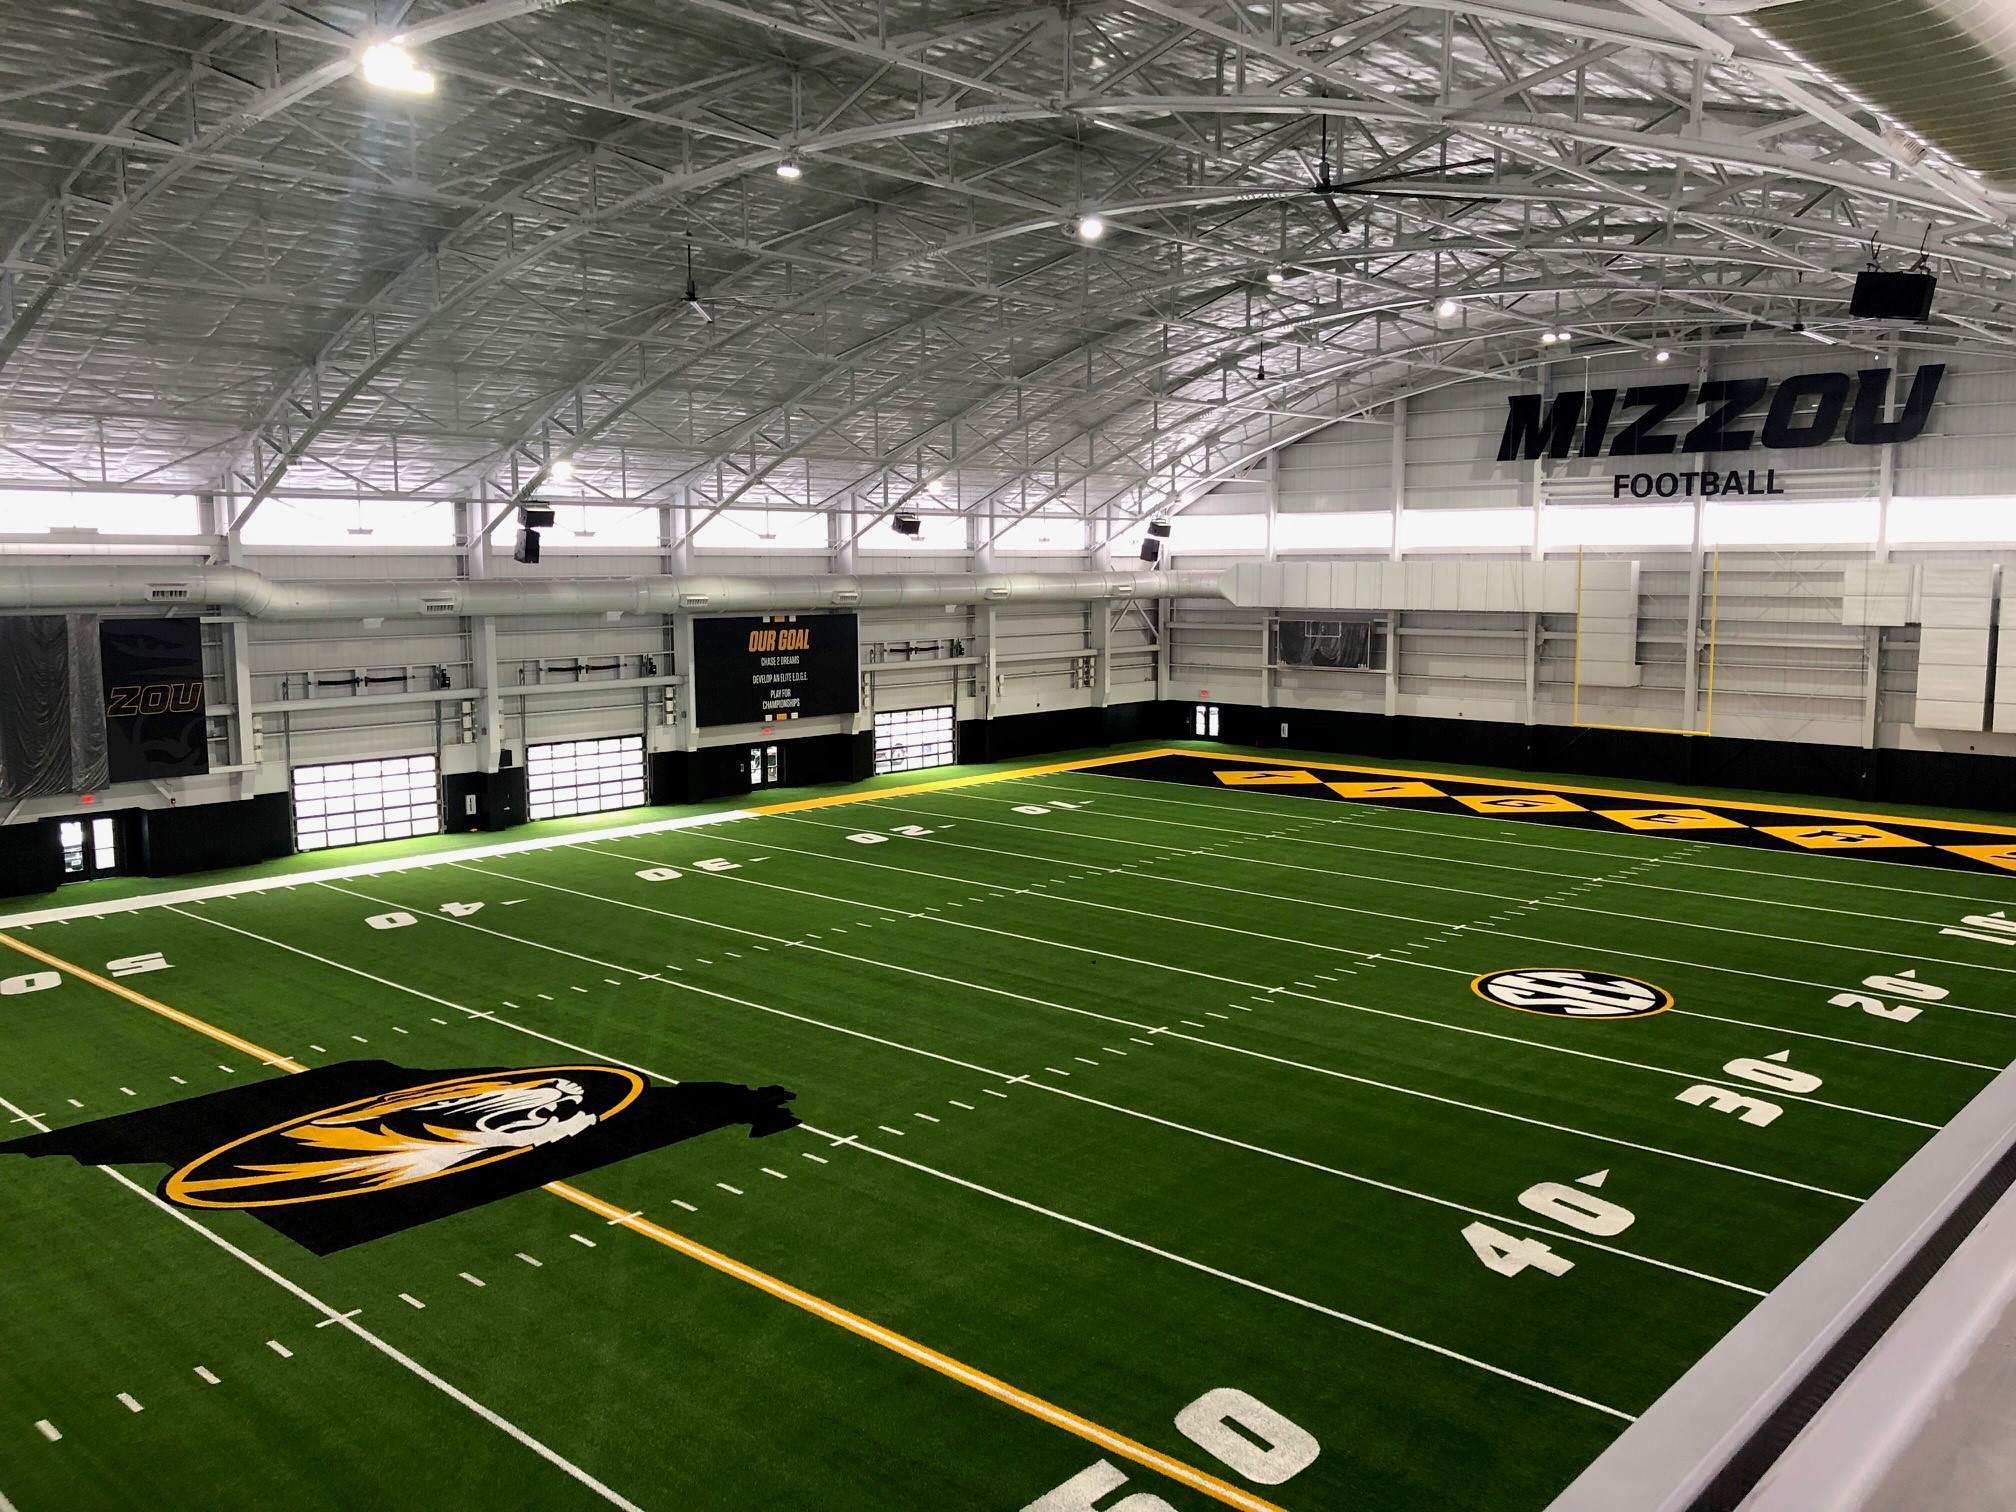 University of Missouri's Stephens Indoor Facility